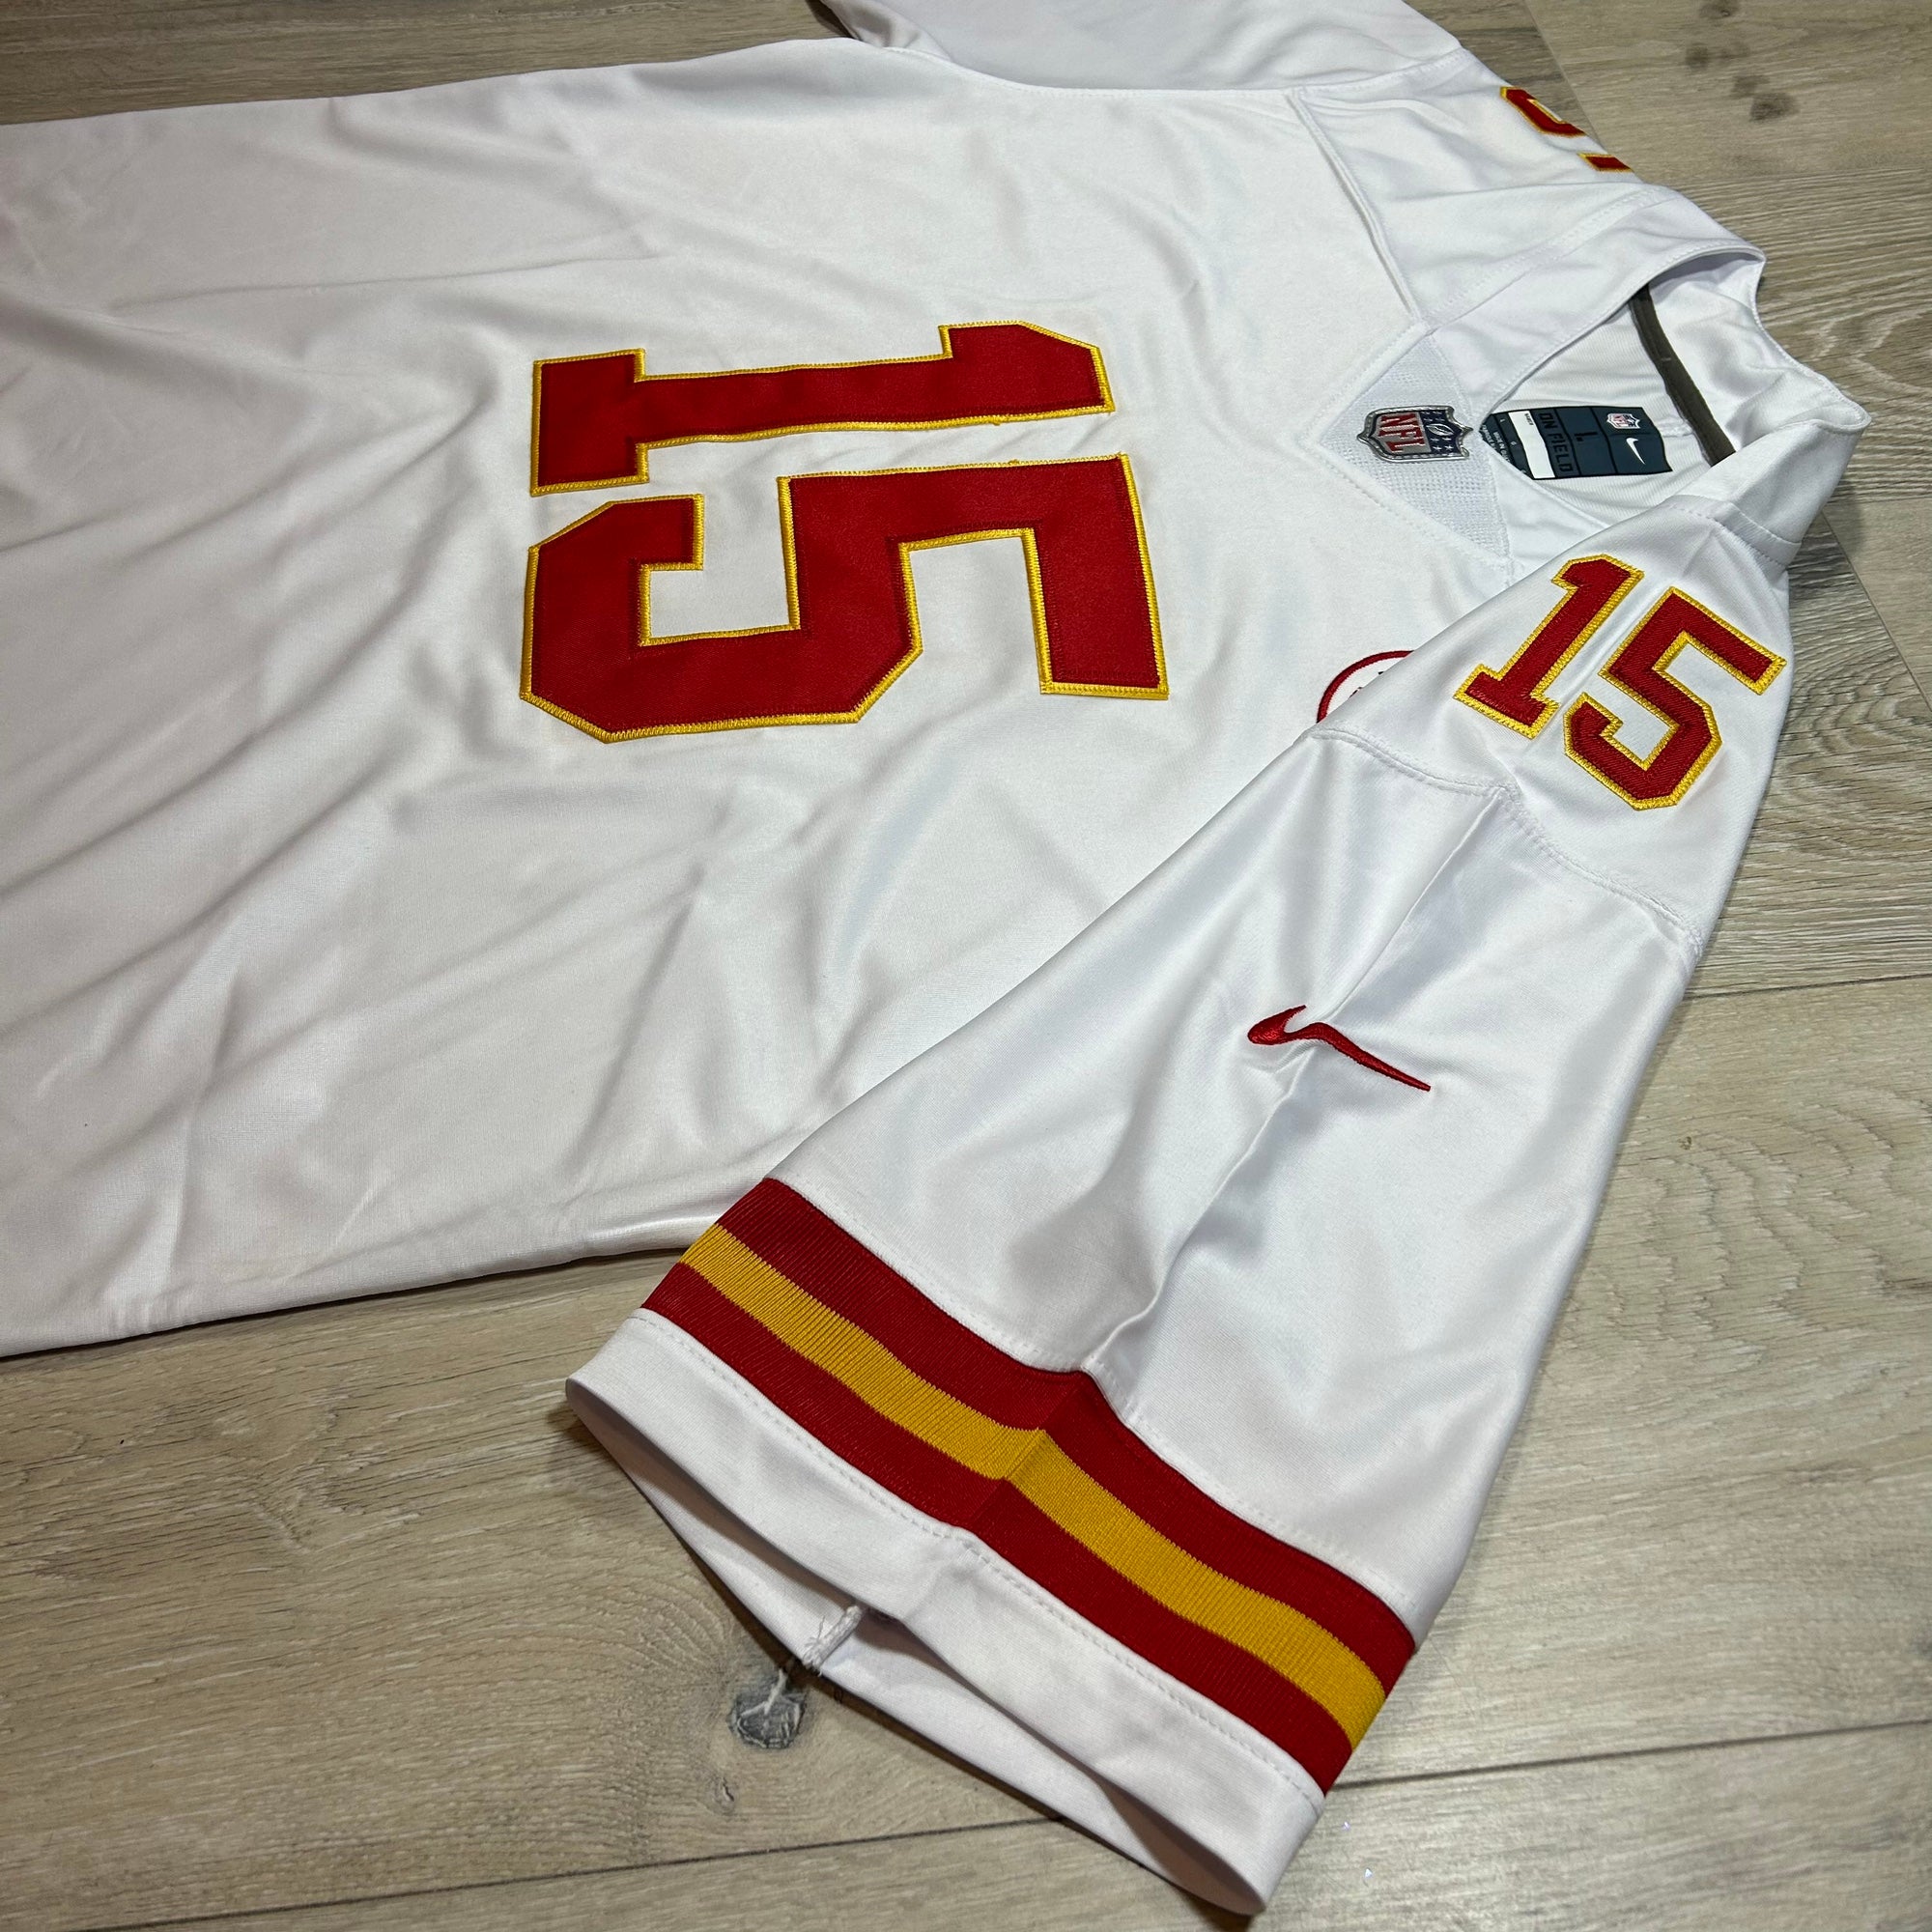 Men's Nike Patrick Mahomes White Kansas City Chiefs Game Jersey Size: 3XL